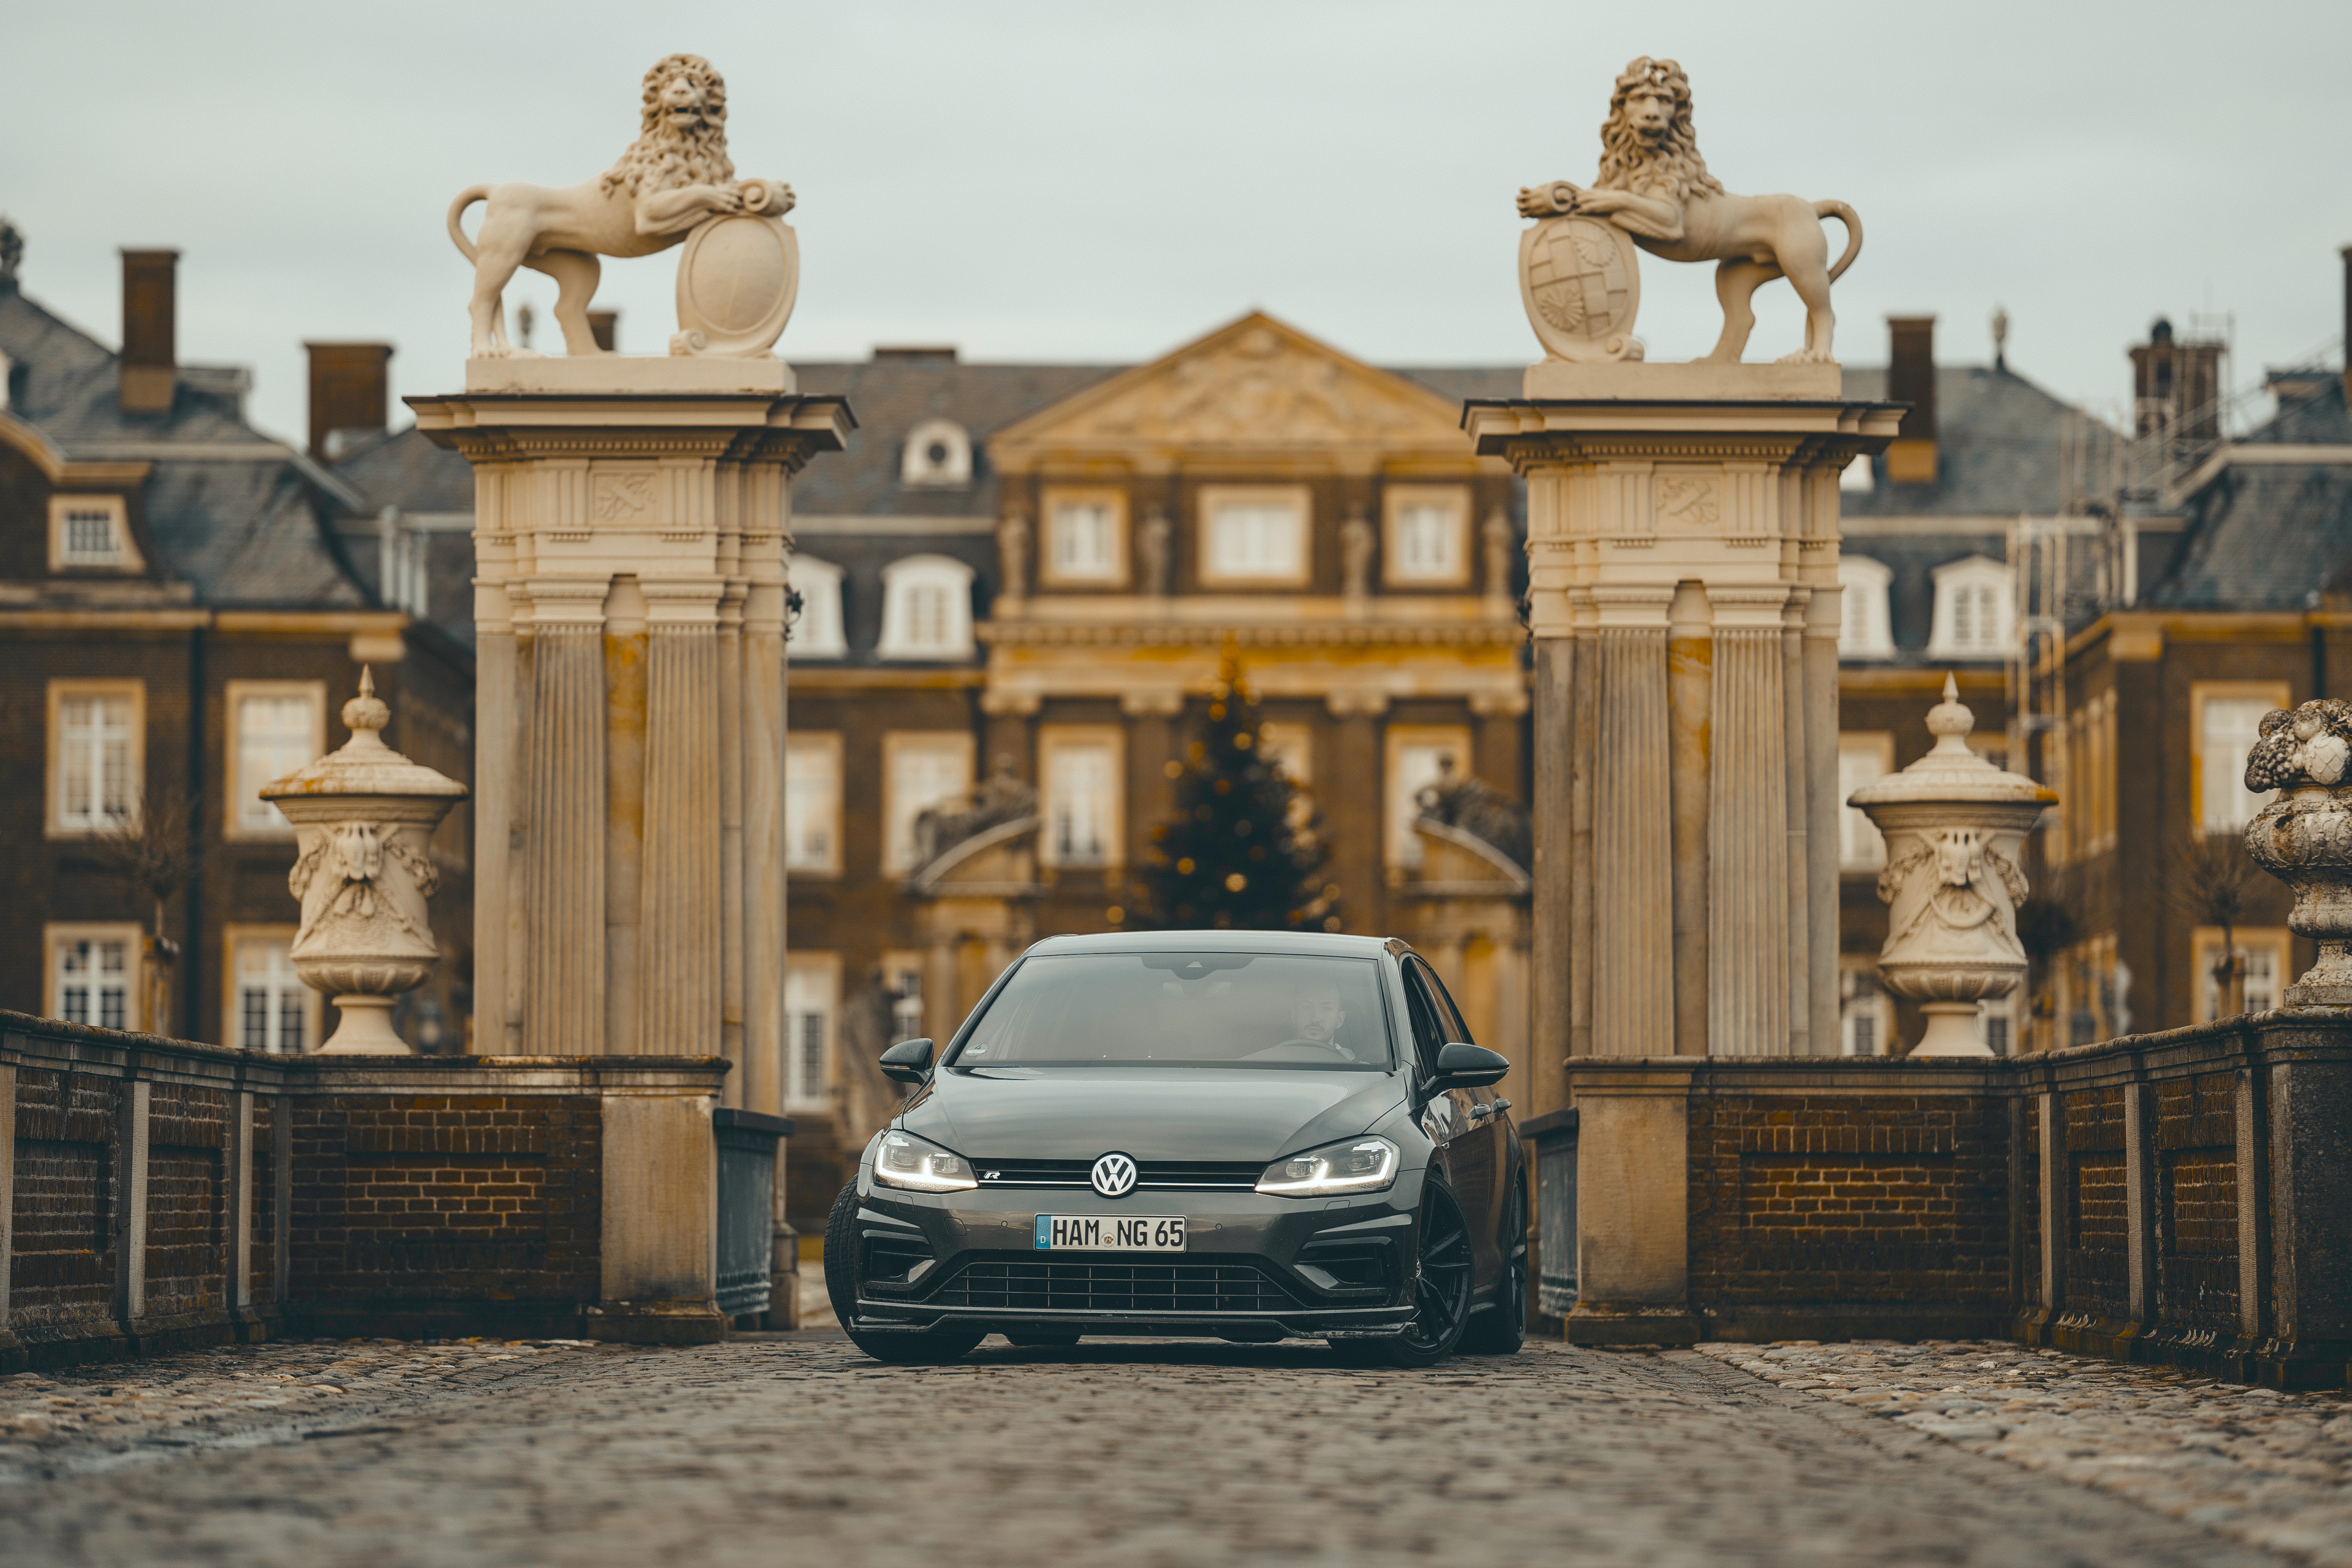 volkswagen, cars, car, grey, column, columns, palace UHD